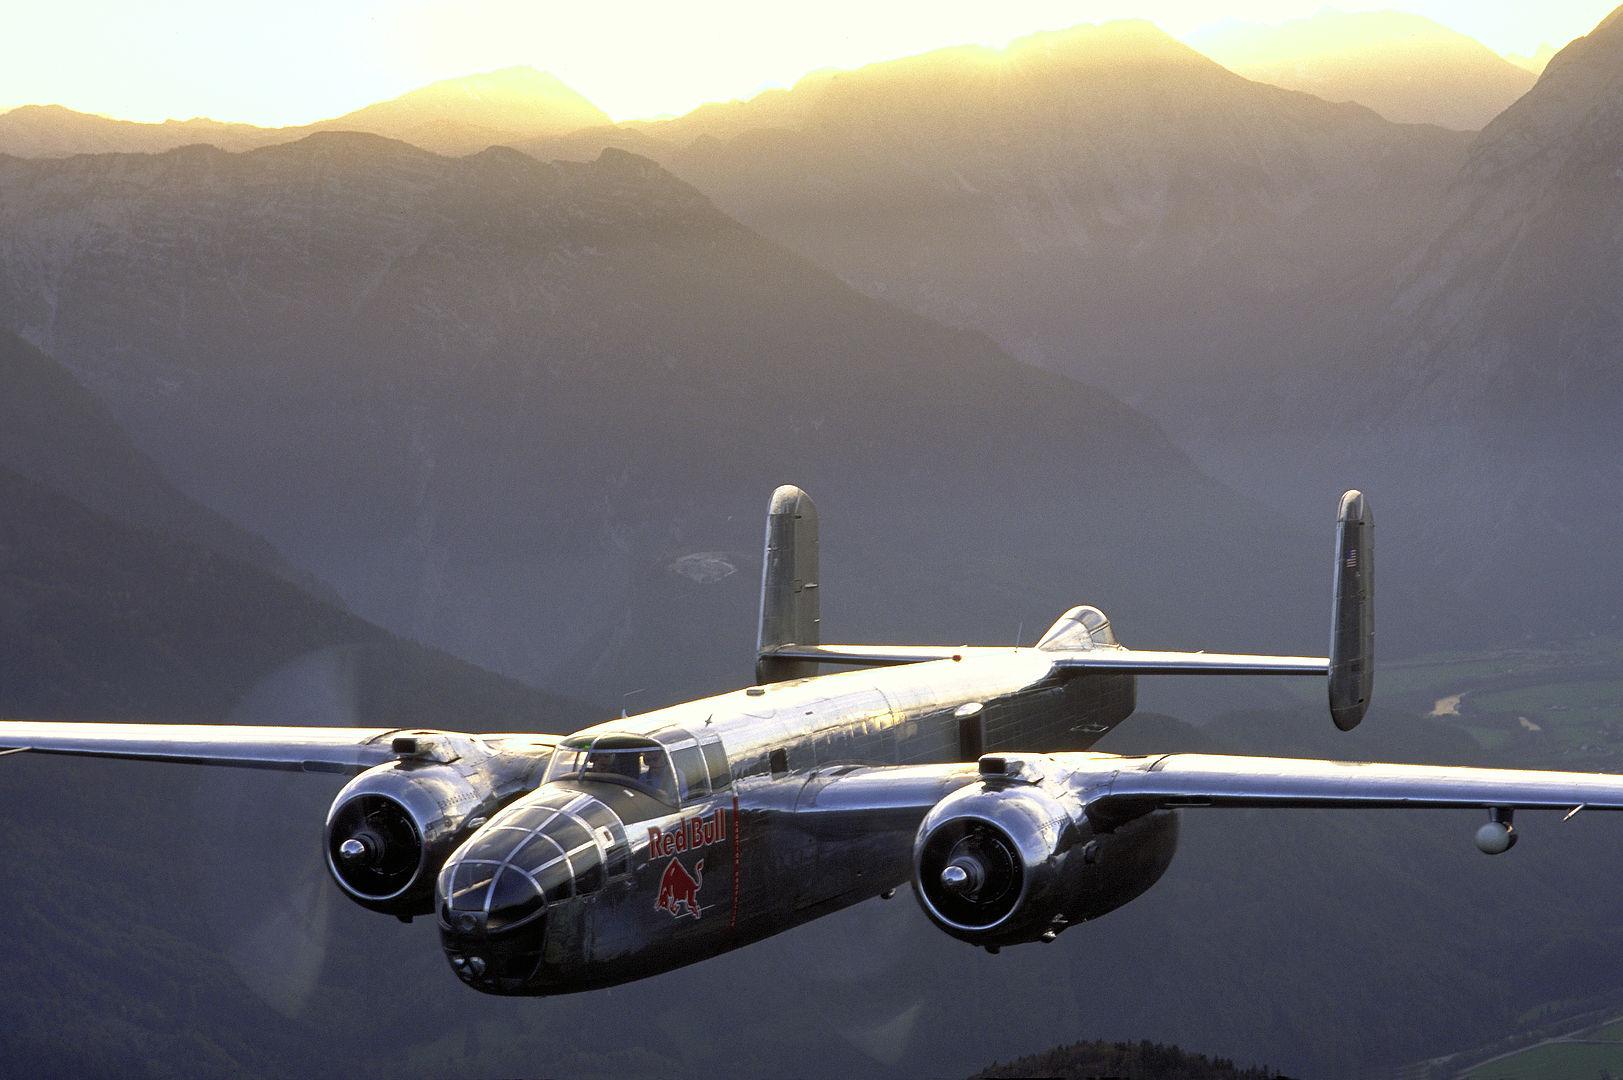 North American B 25J Mitchell. The Flying Bulls